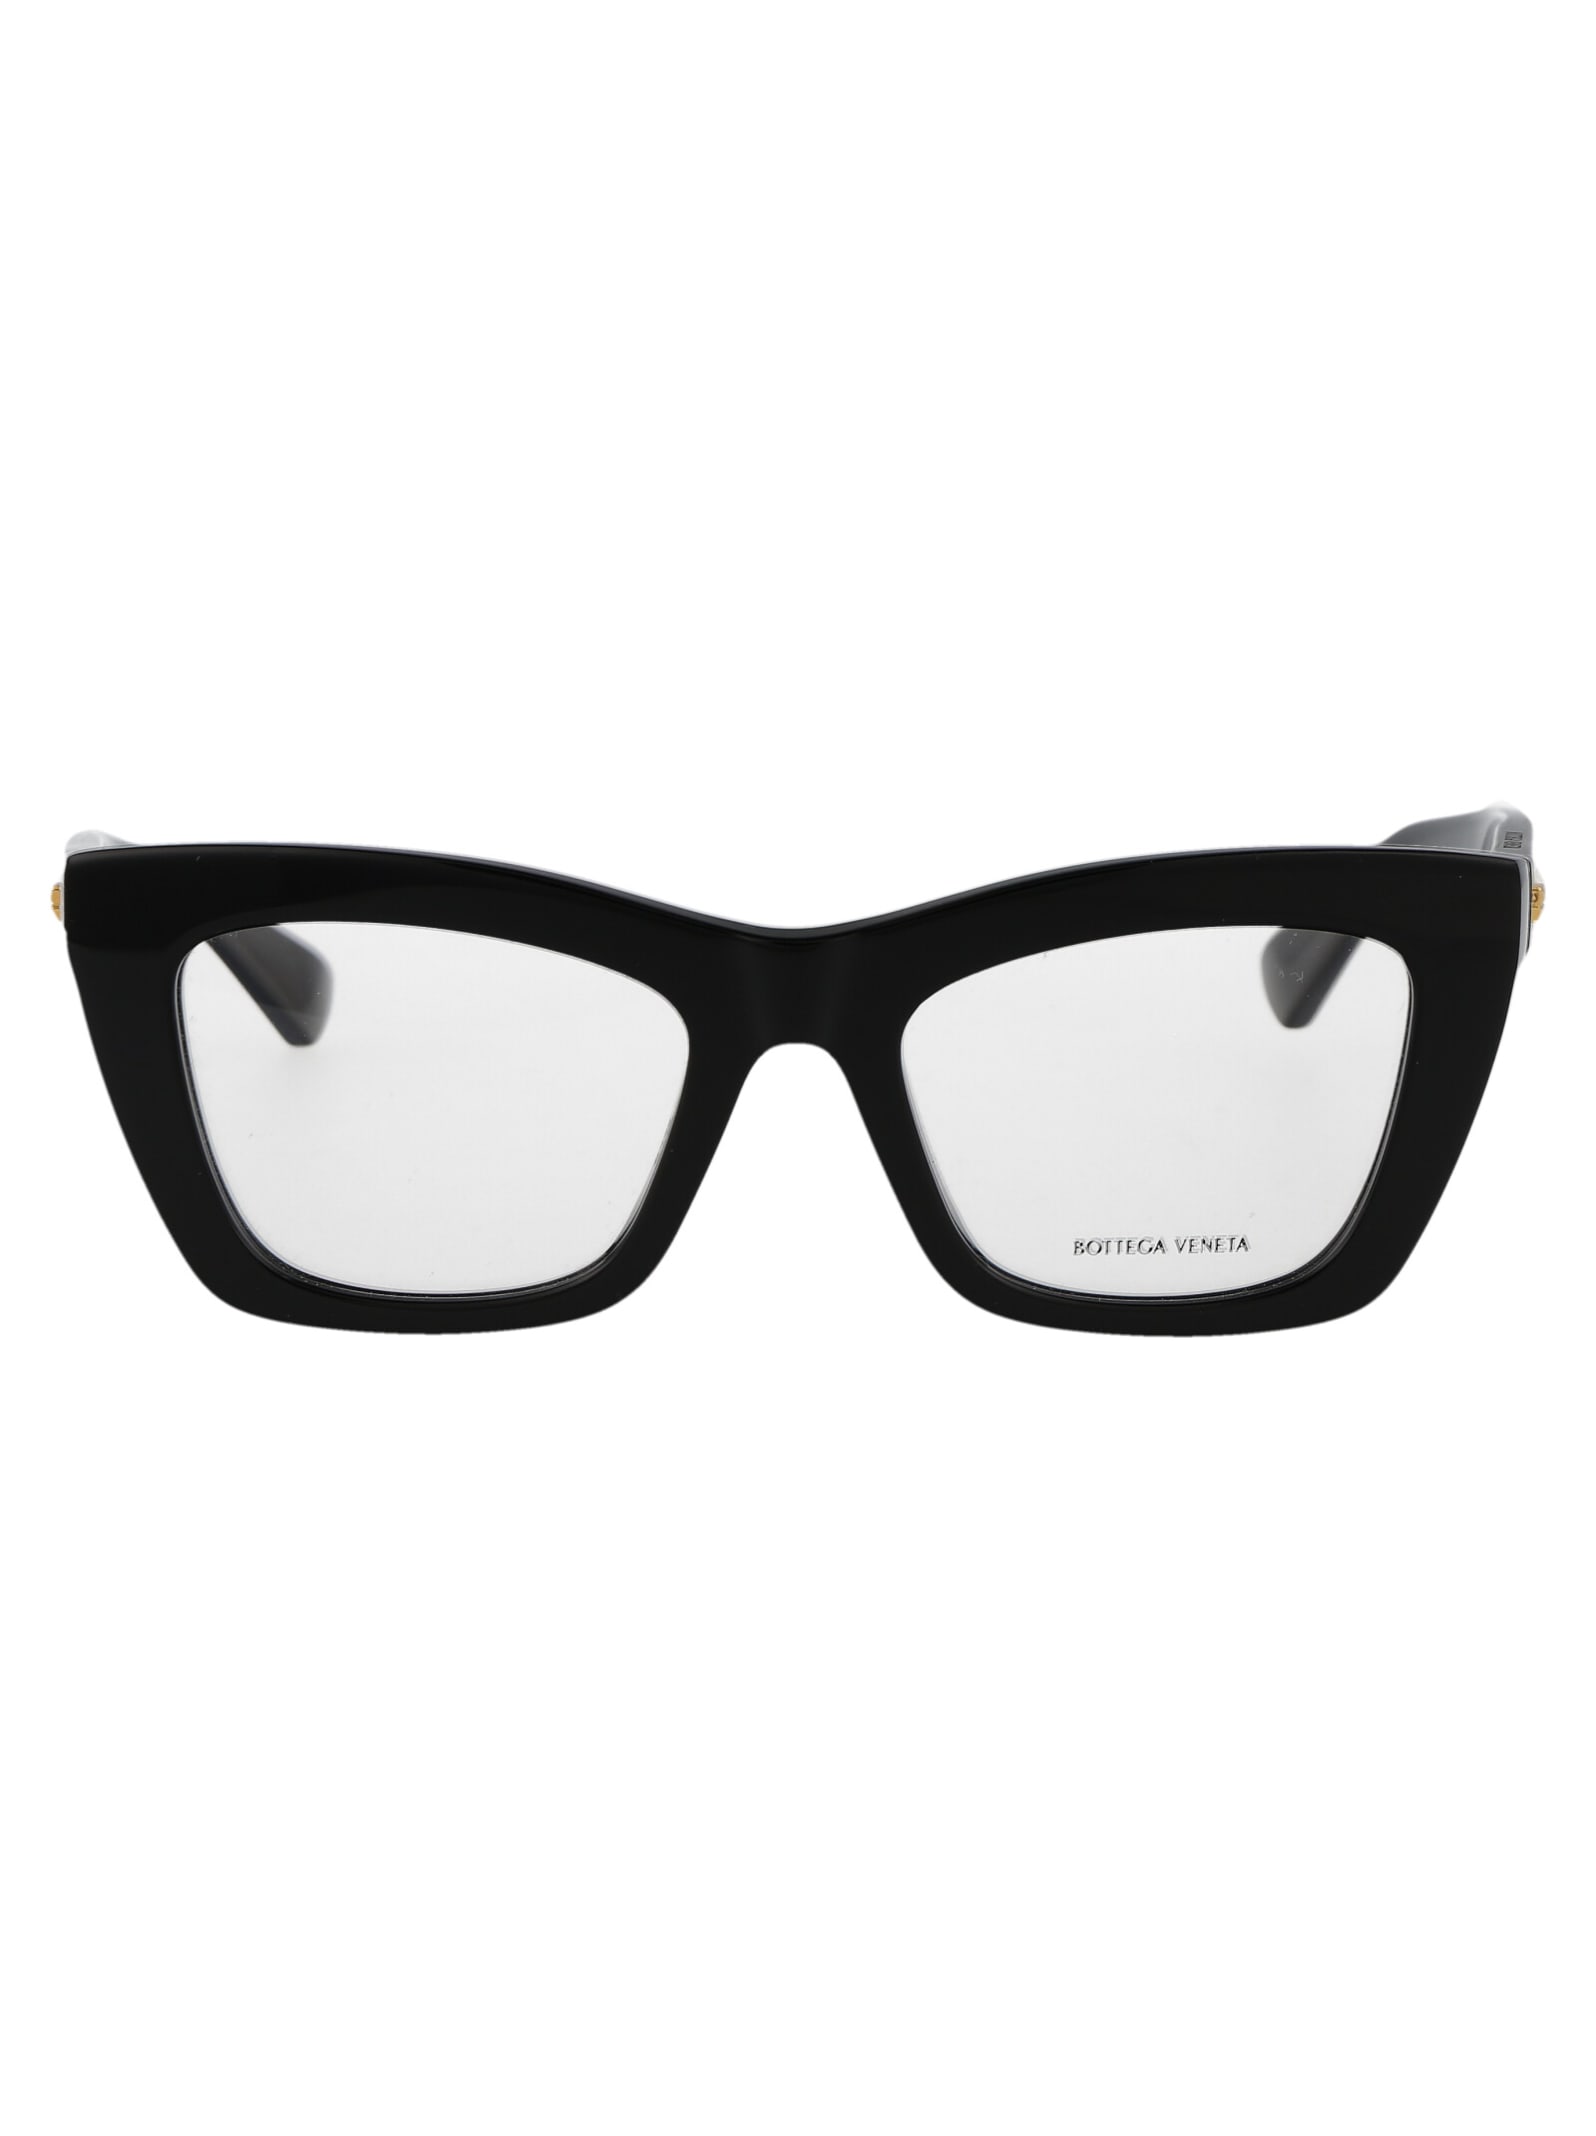 Bv1215o Glasses